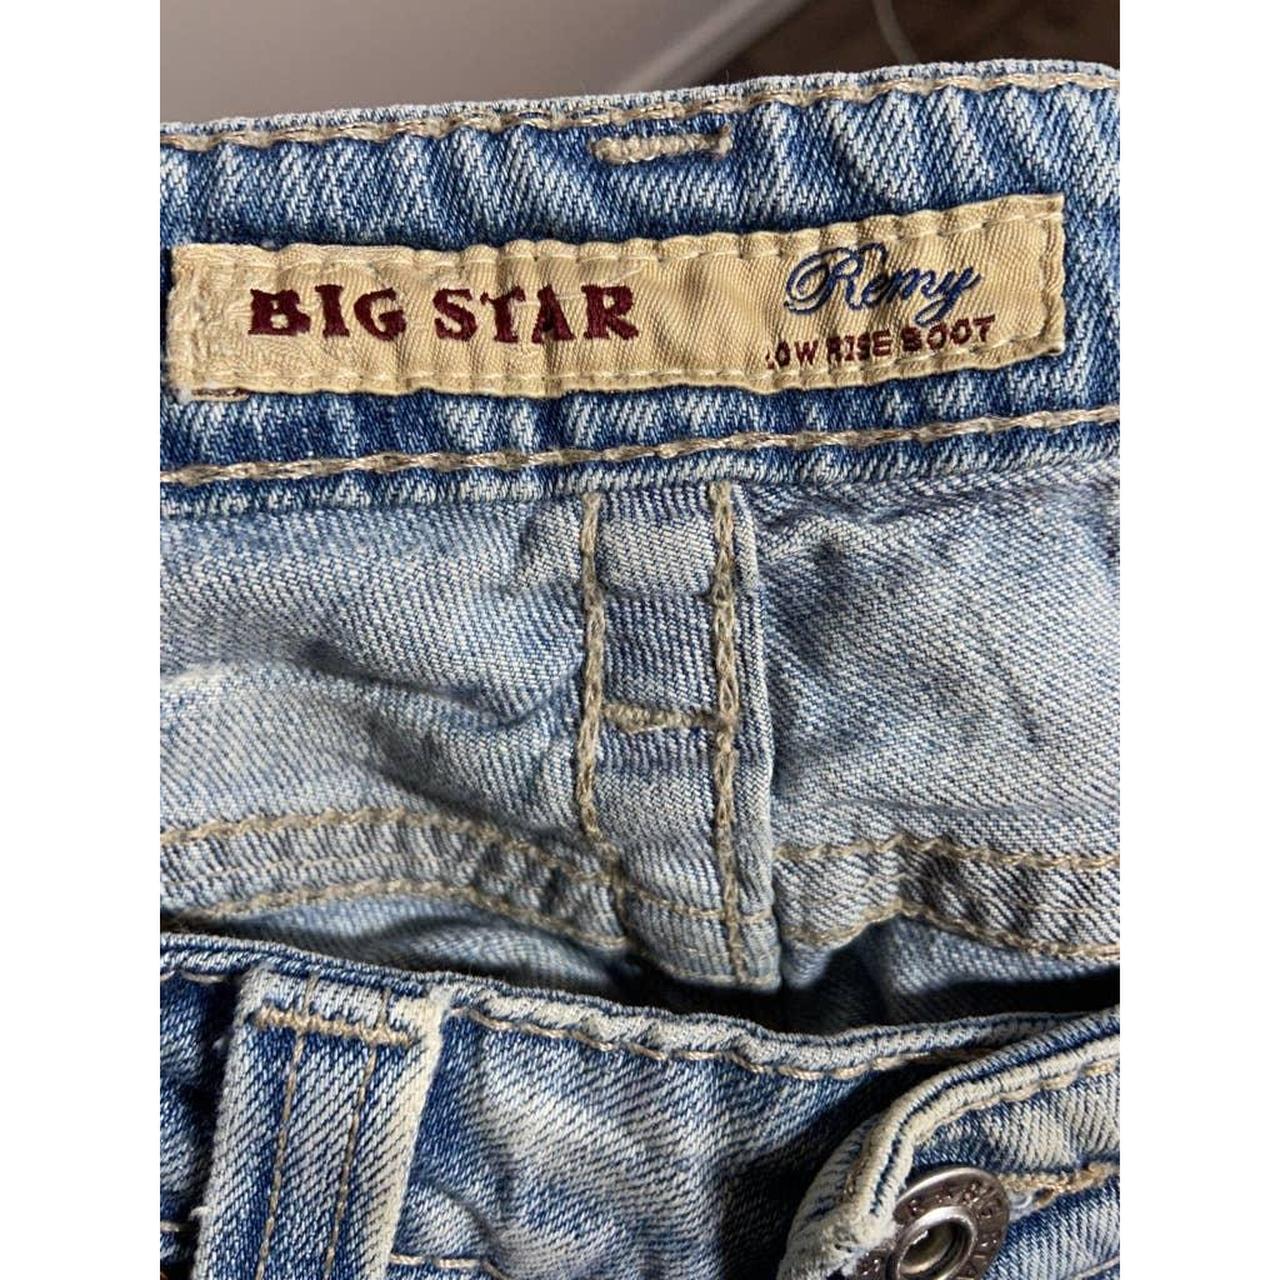 BIG STAR Remy Jeans Low Rise Bootcut Leg Faded Denim... - Depop